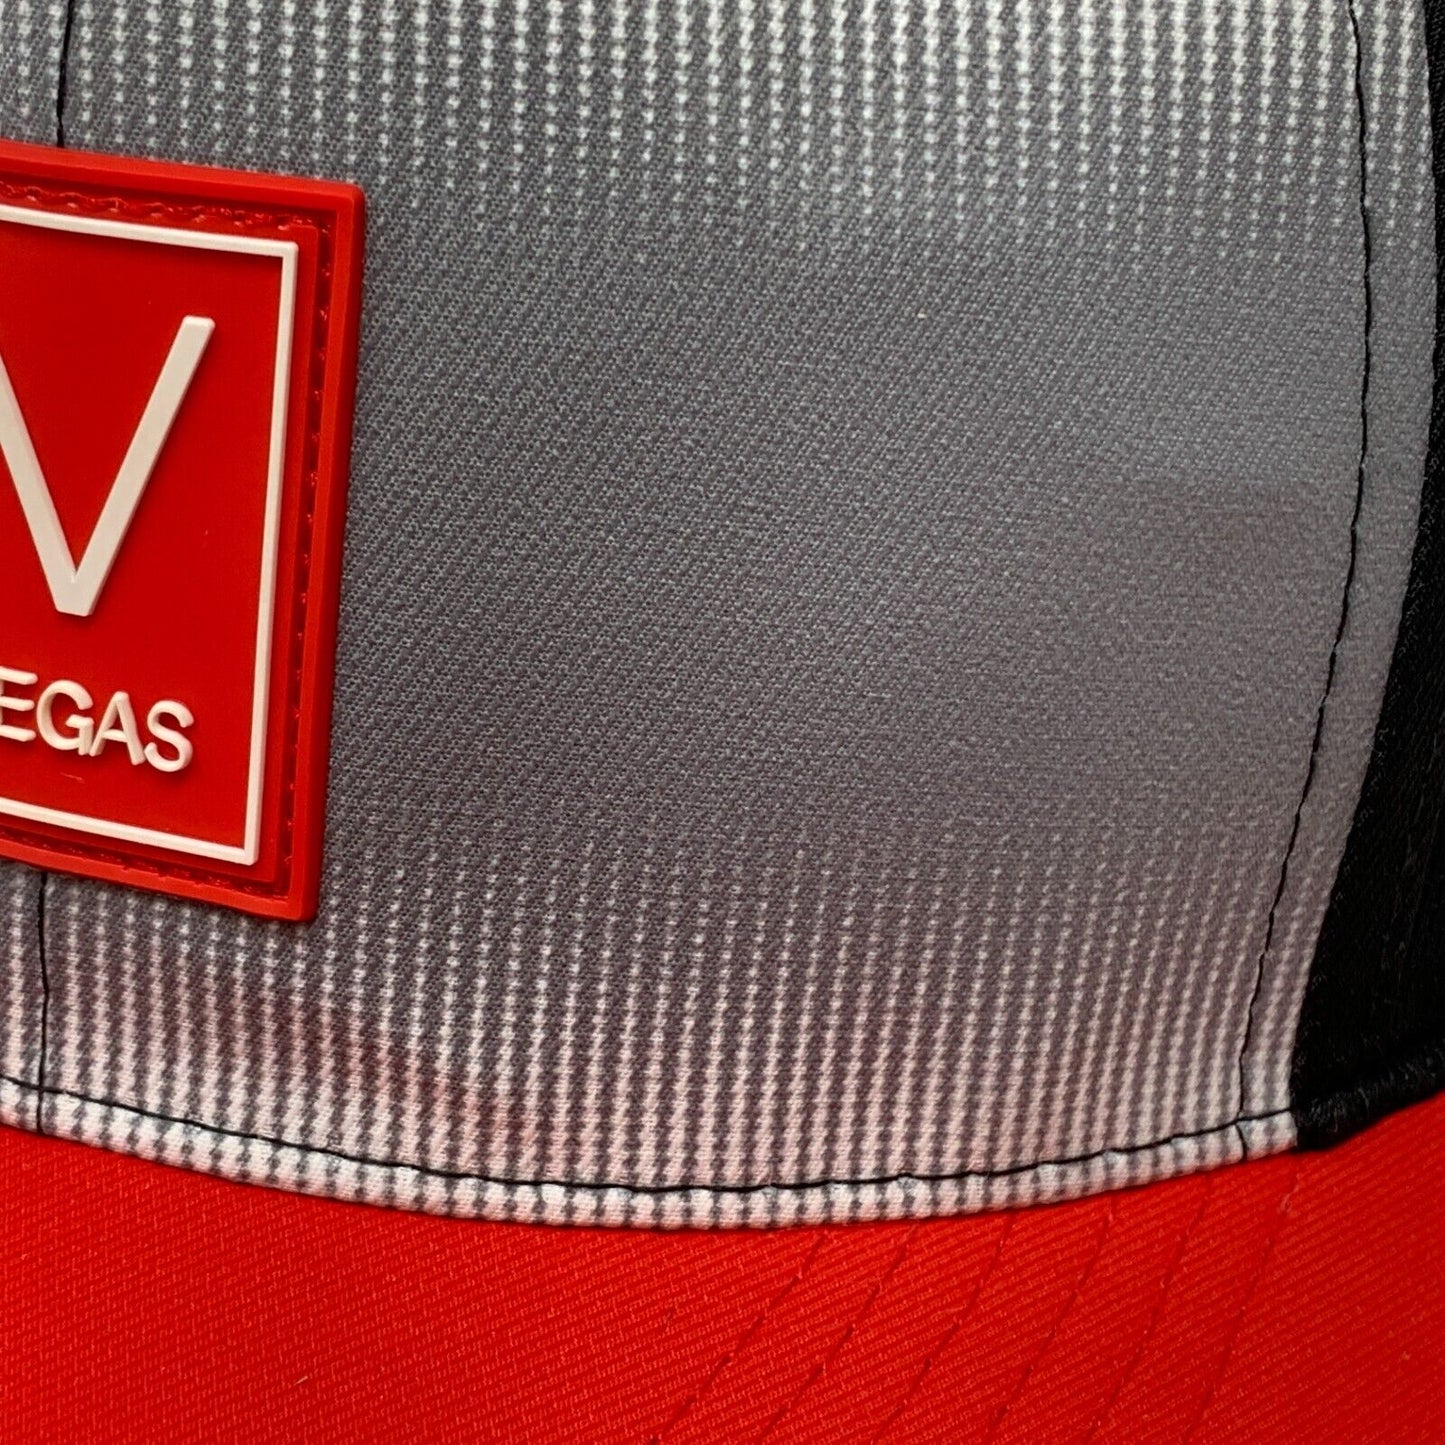 Las Vegas Snapback Hat Black Red White Casino Gambling 6 Six Panel Baseball Cap